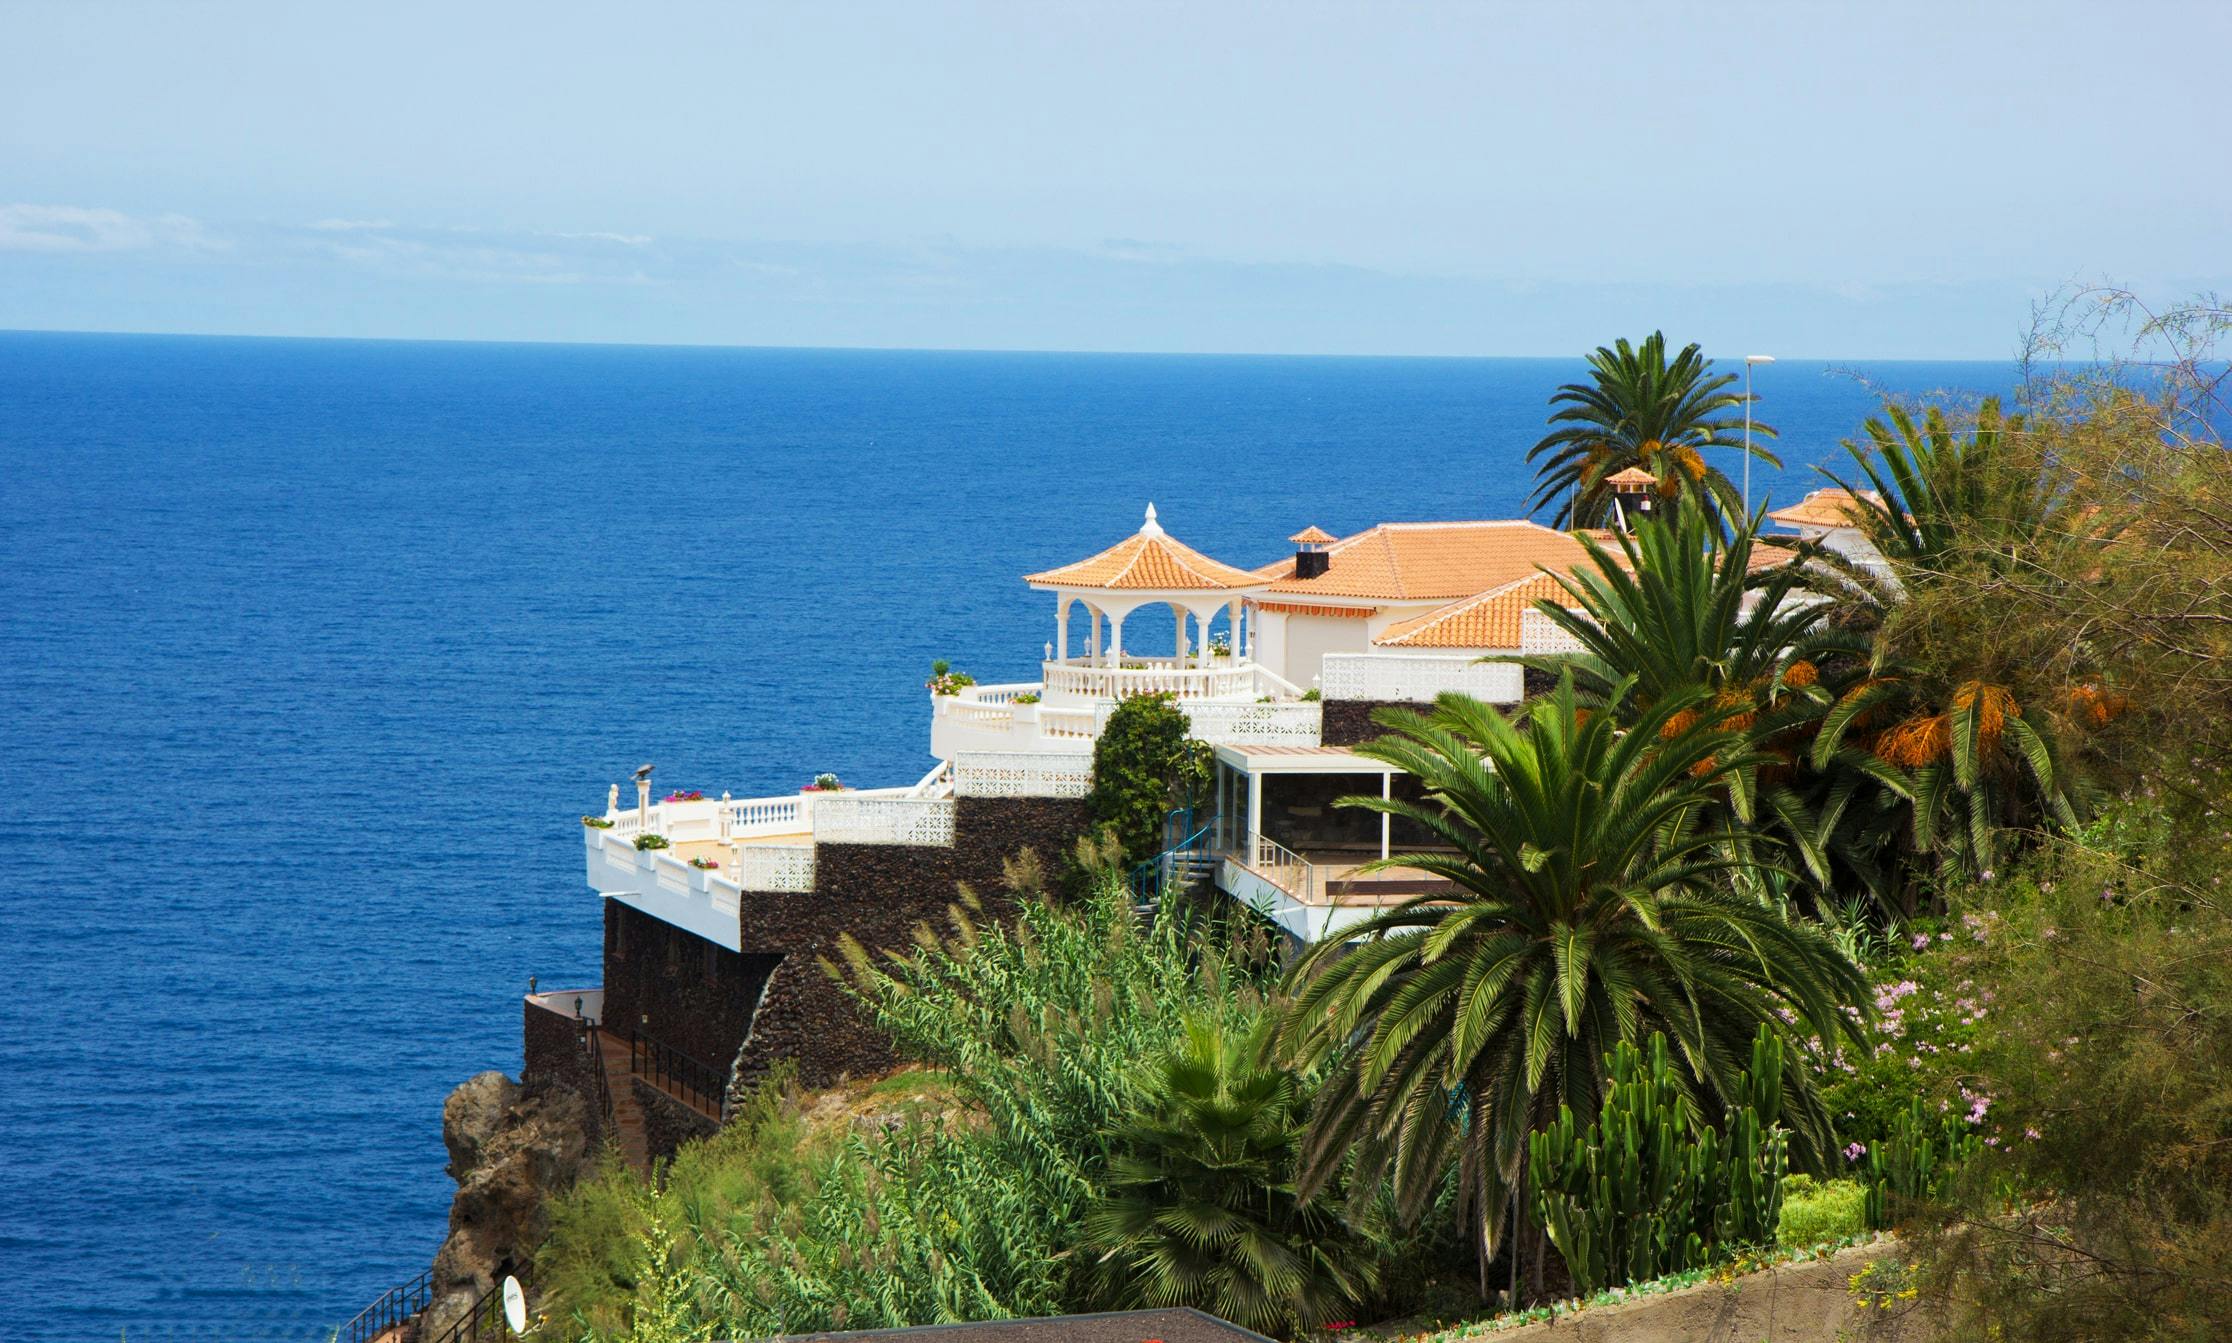 Clifftop villas in Tenerife